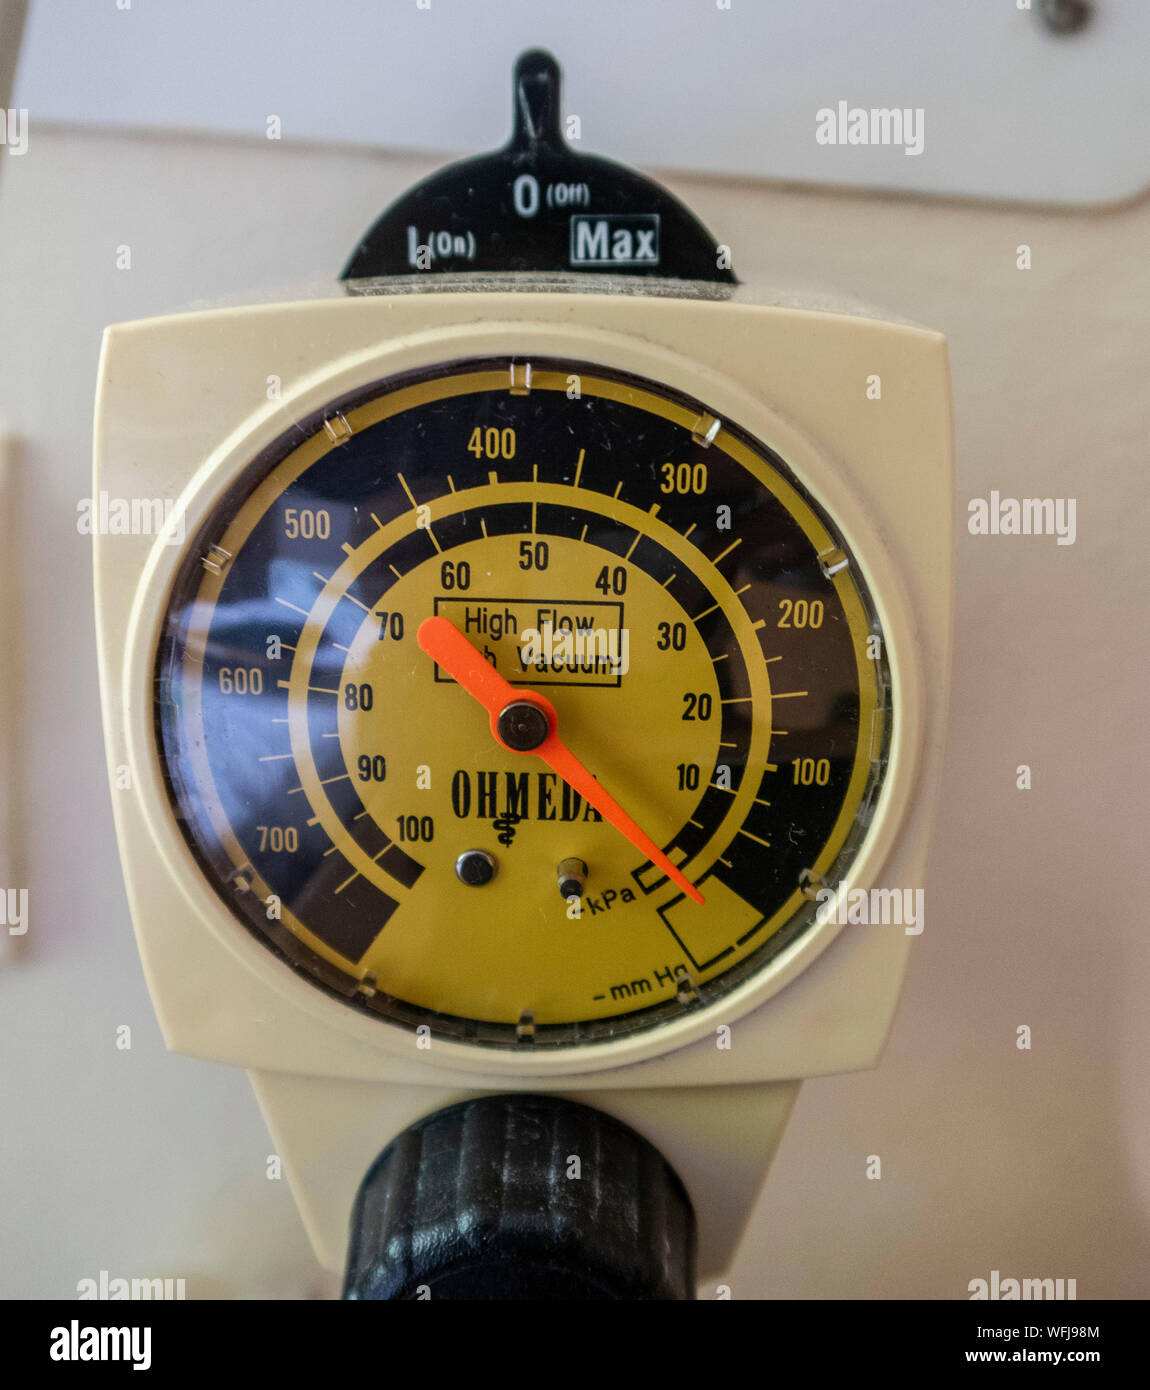 Ohmeda hospital oxygen gauge. Stock Photo